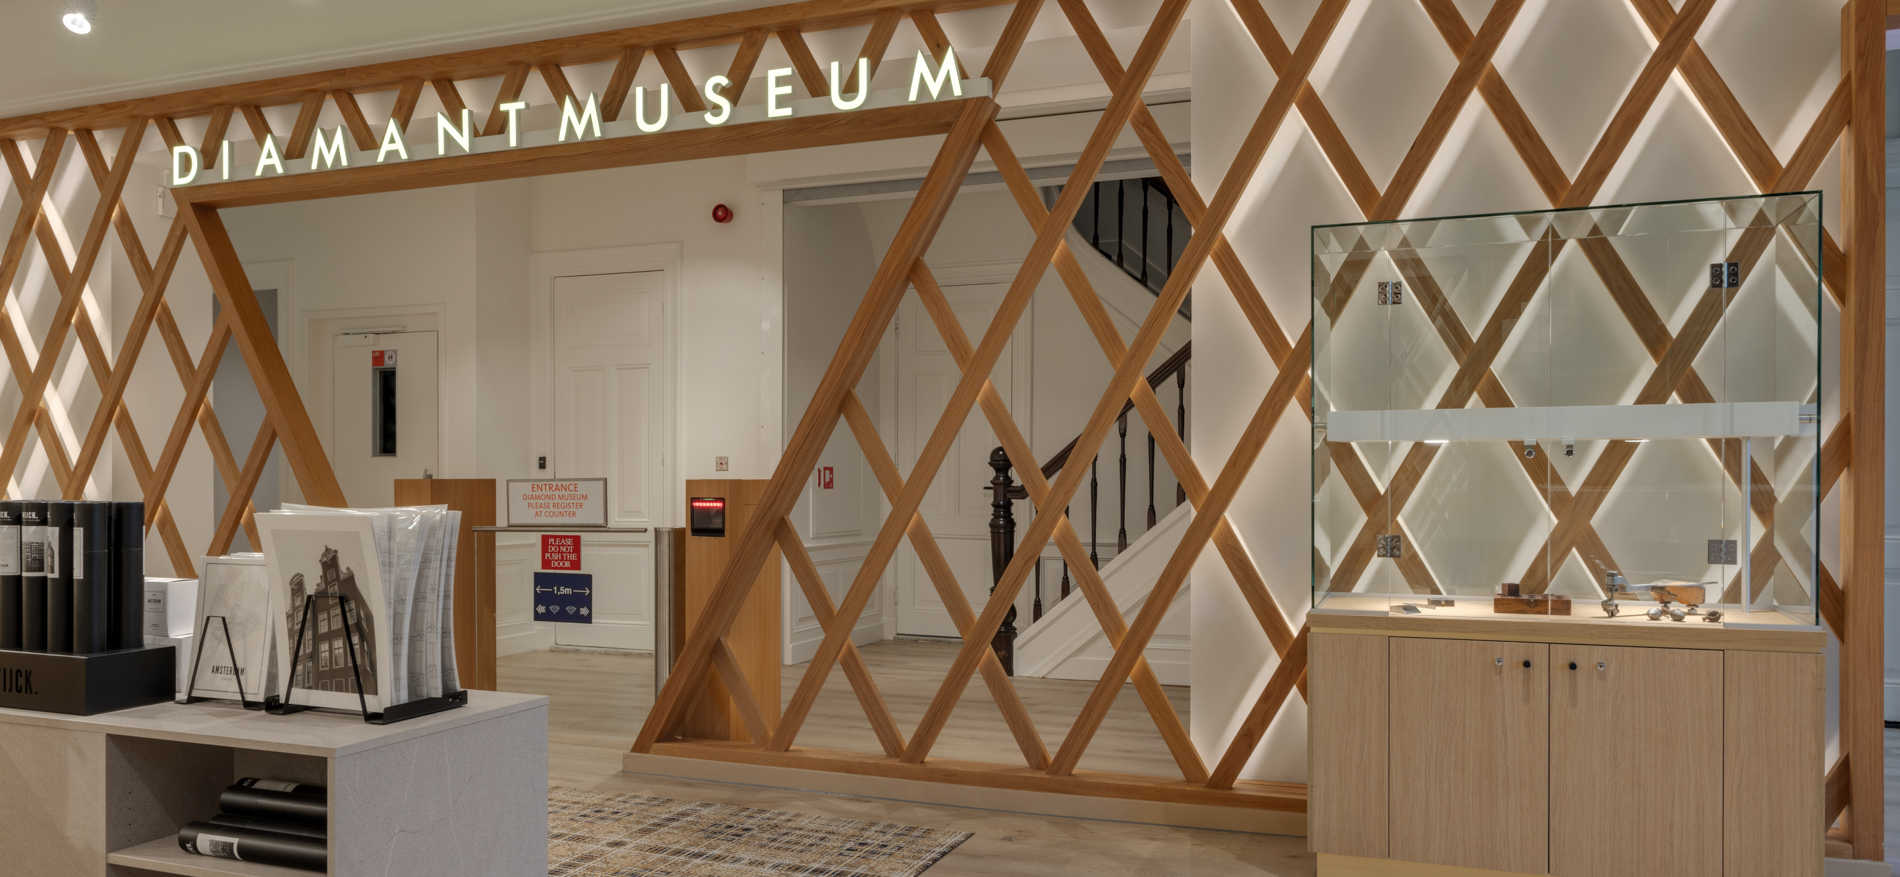 Diamant Museum | Amsterdam (NL) - Museum en tourisme